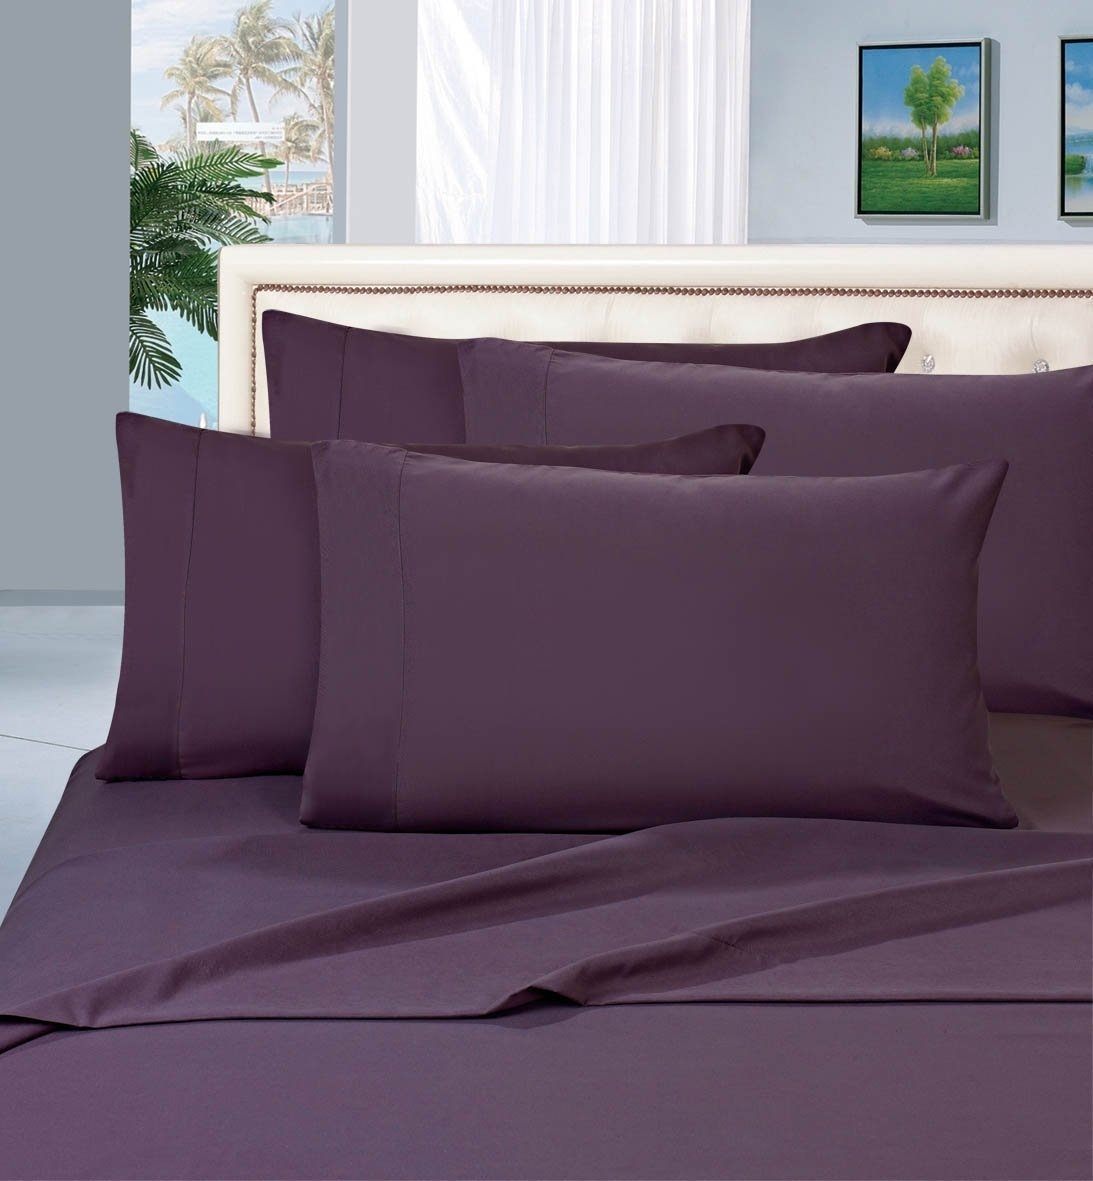 Elegant Comfort 1500 Series Wrinkle Resistant Egyptian Quality Hypoallergenic Ultra Soft Luxury 4-piece Bed Sheet Set, Full, Purple